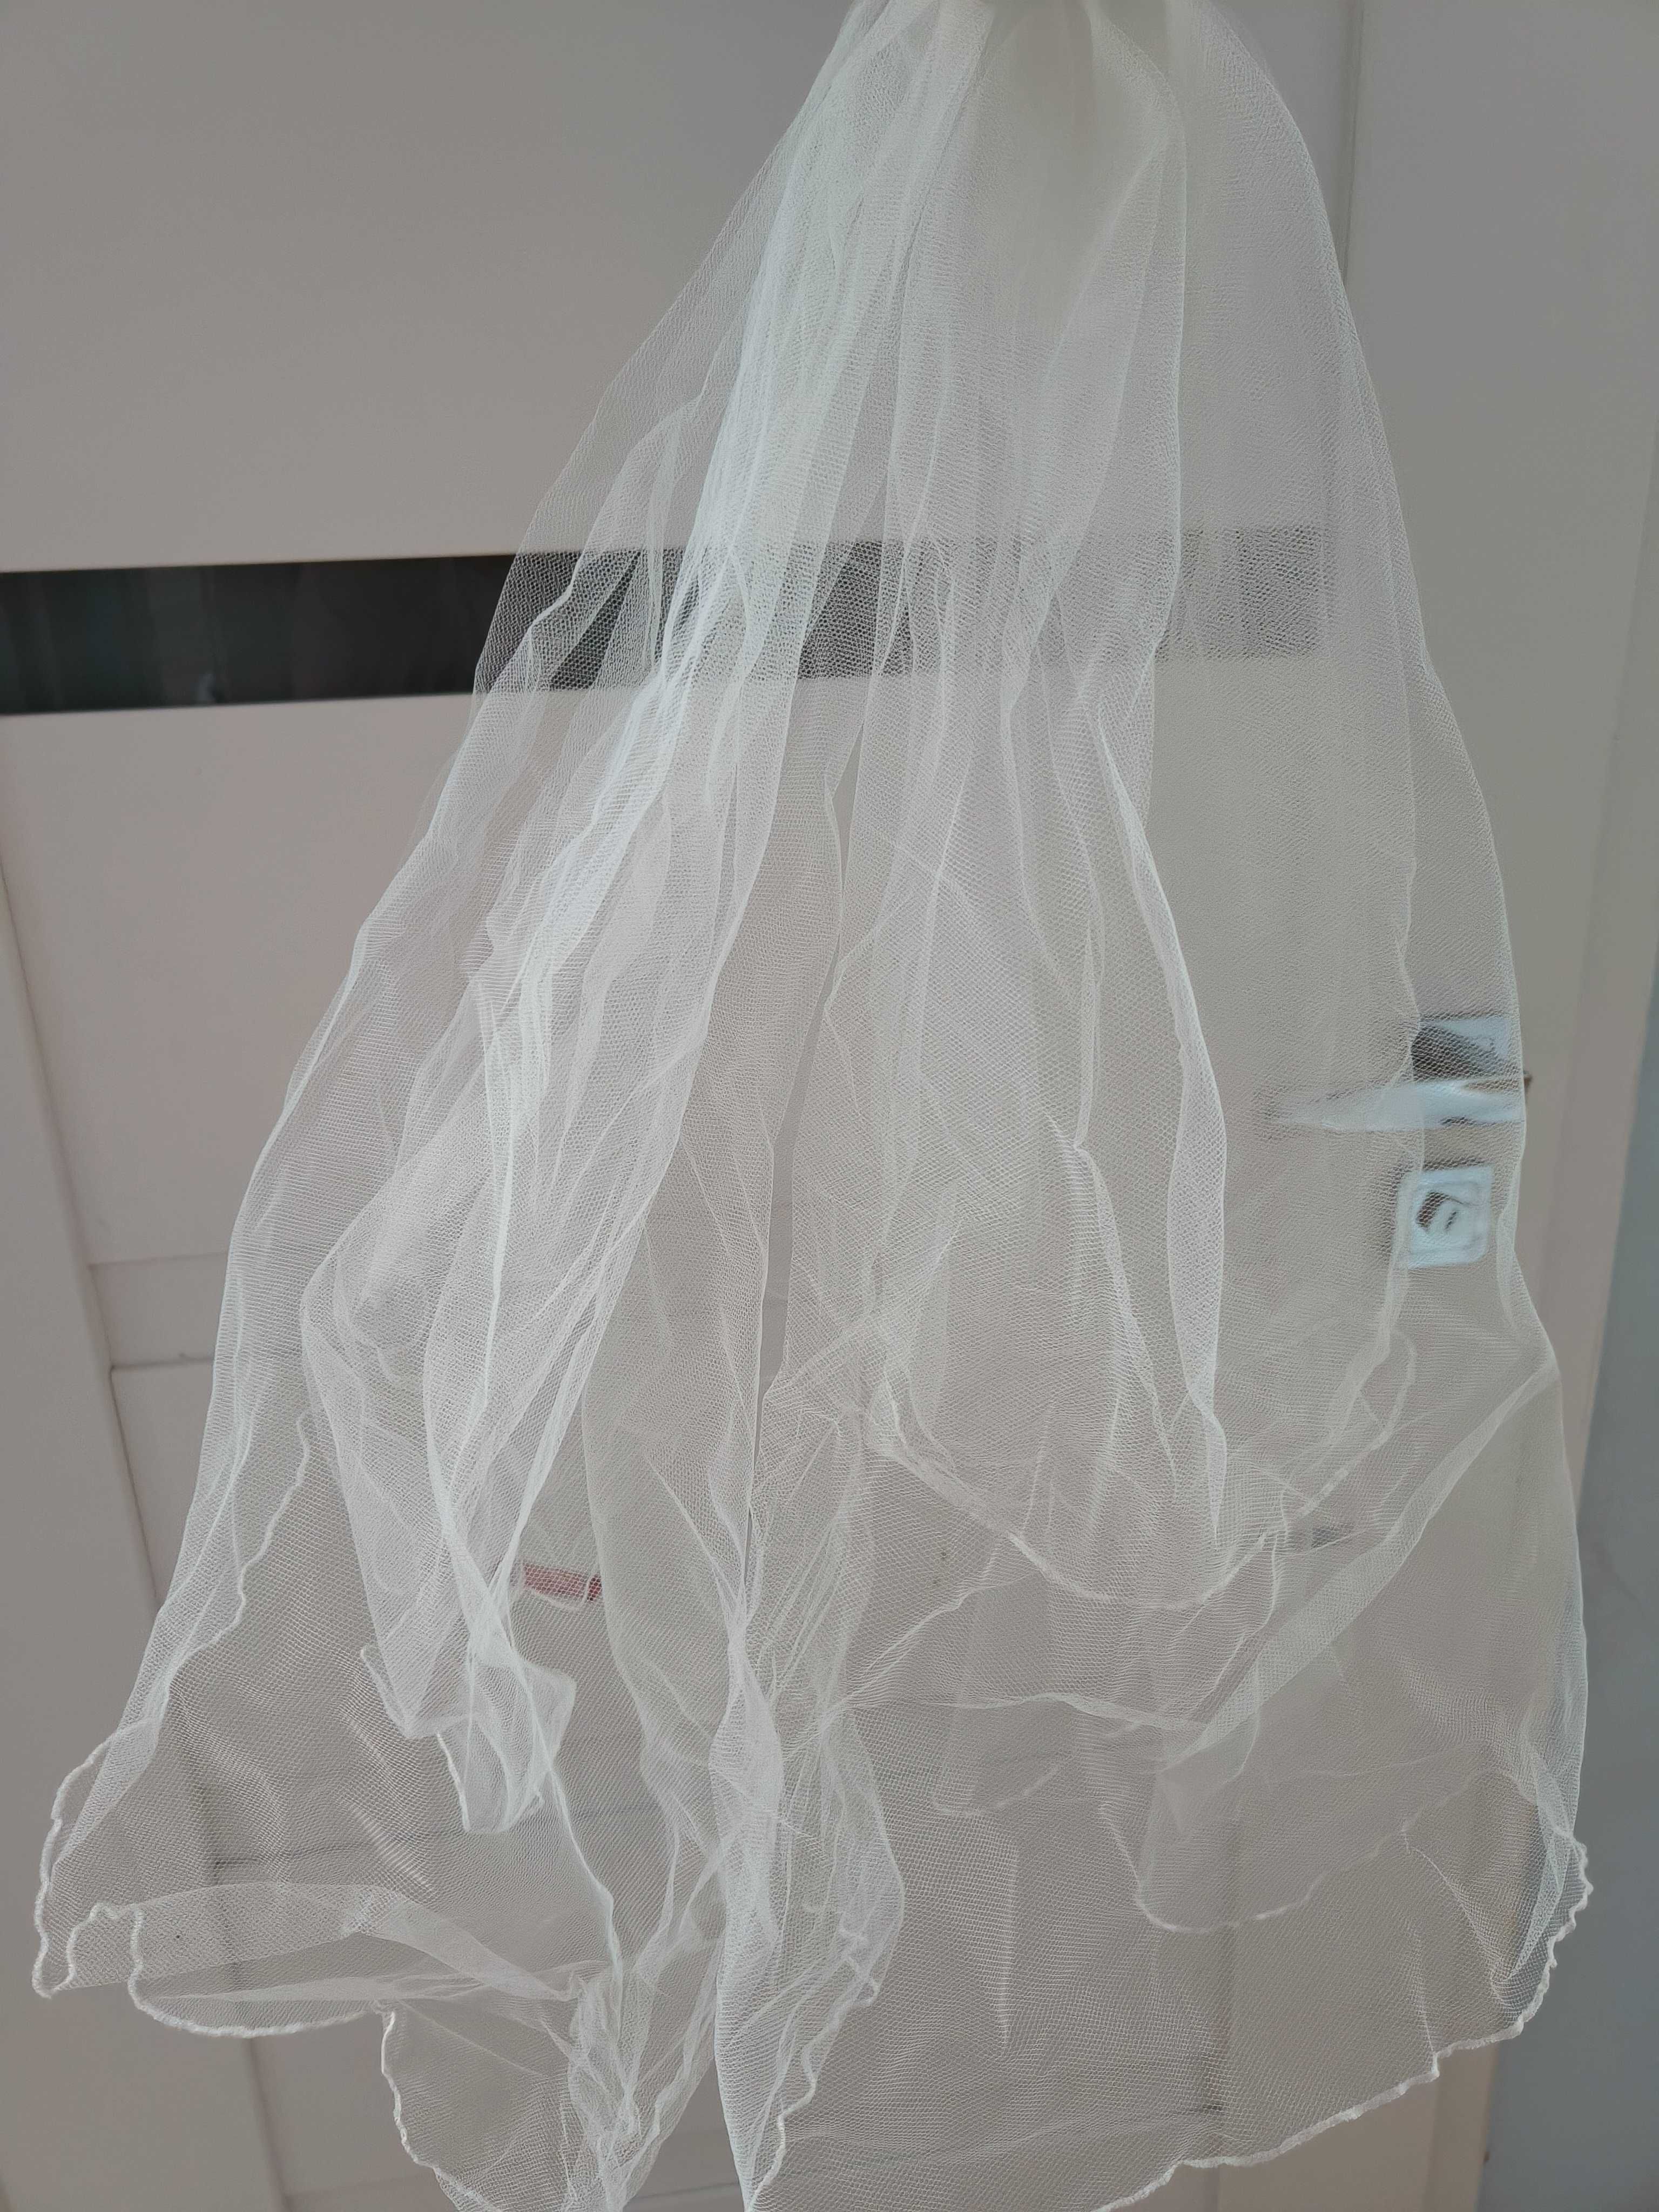 Oryginalna suknia ślubna